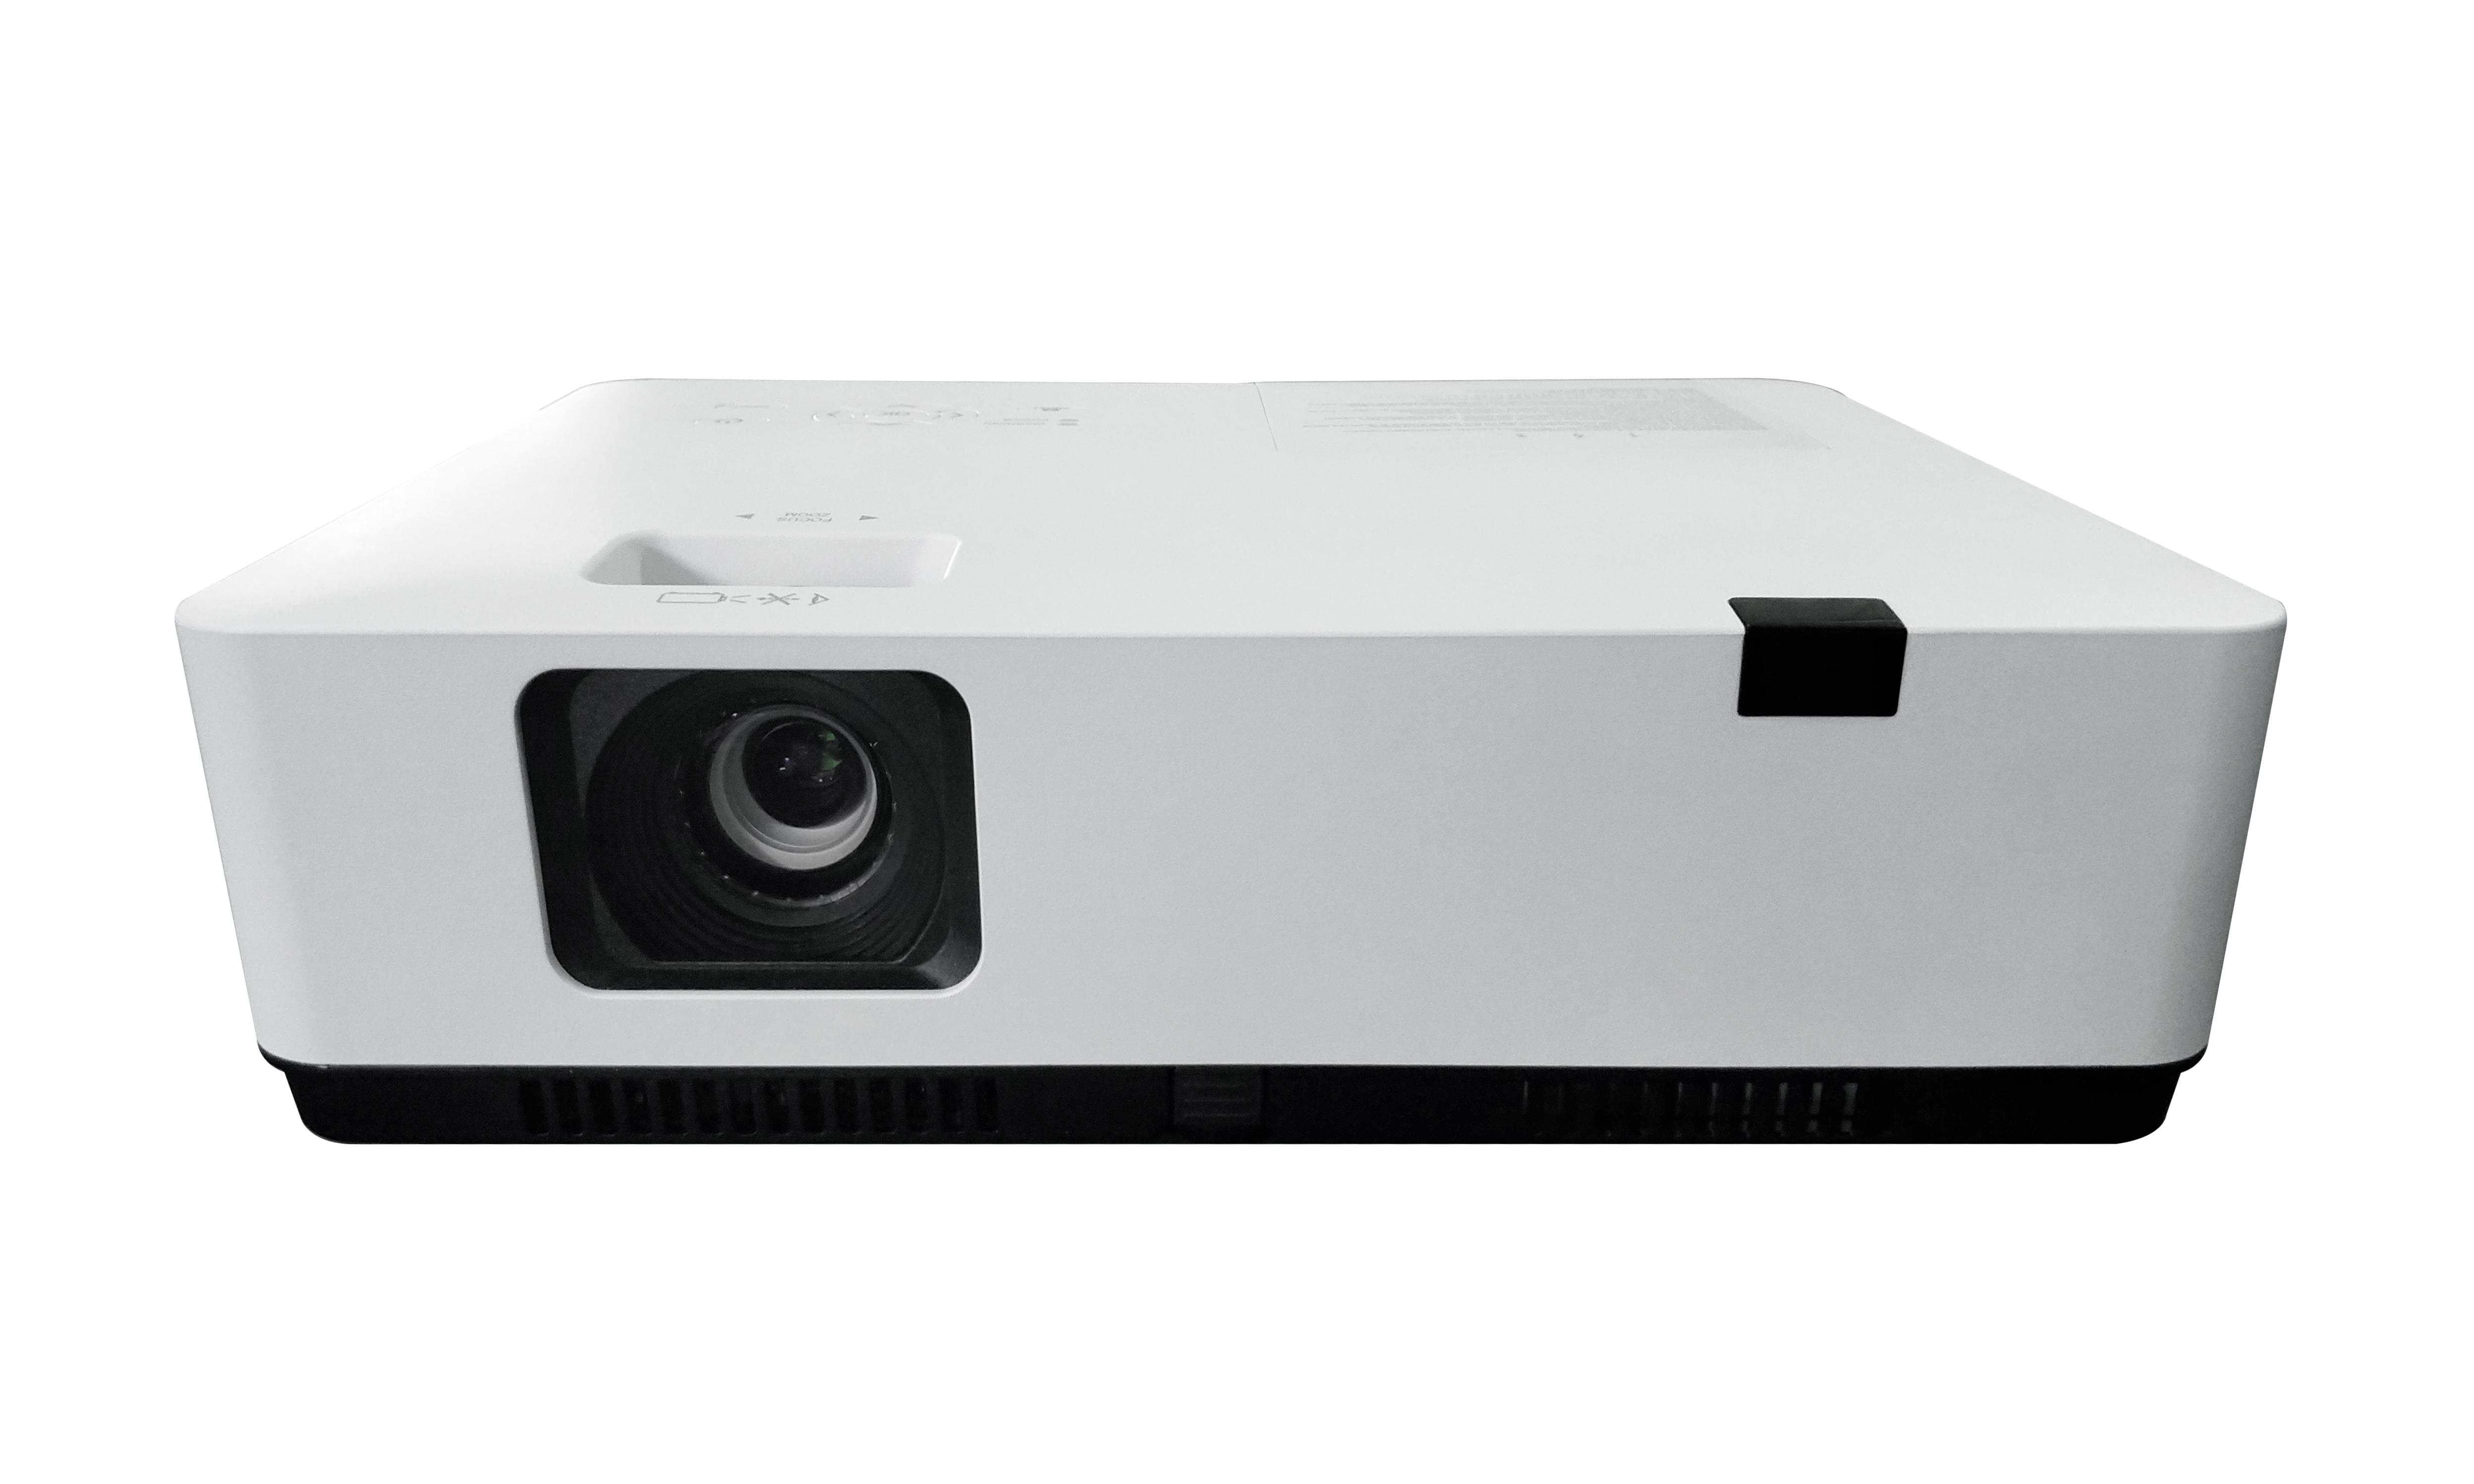 XGA 1024x768 4500 Lumen 3LCD Projector 15000:1 Video Projectors with Speaker